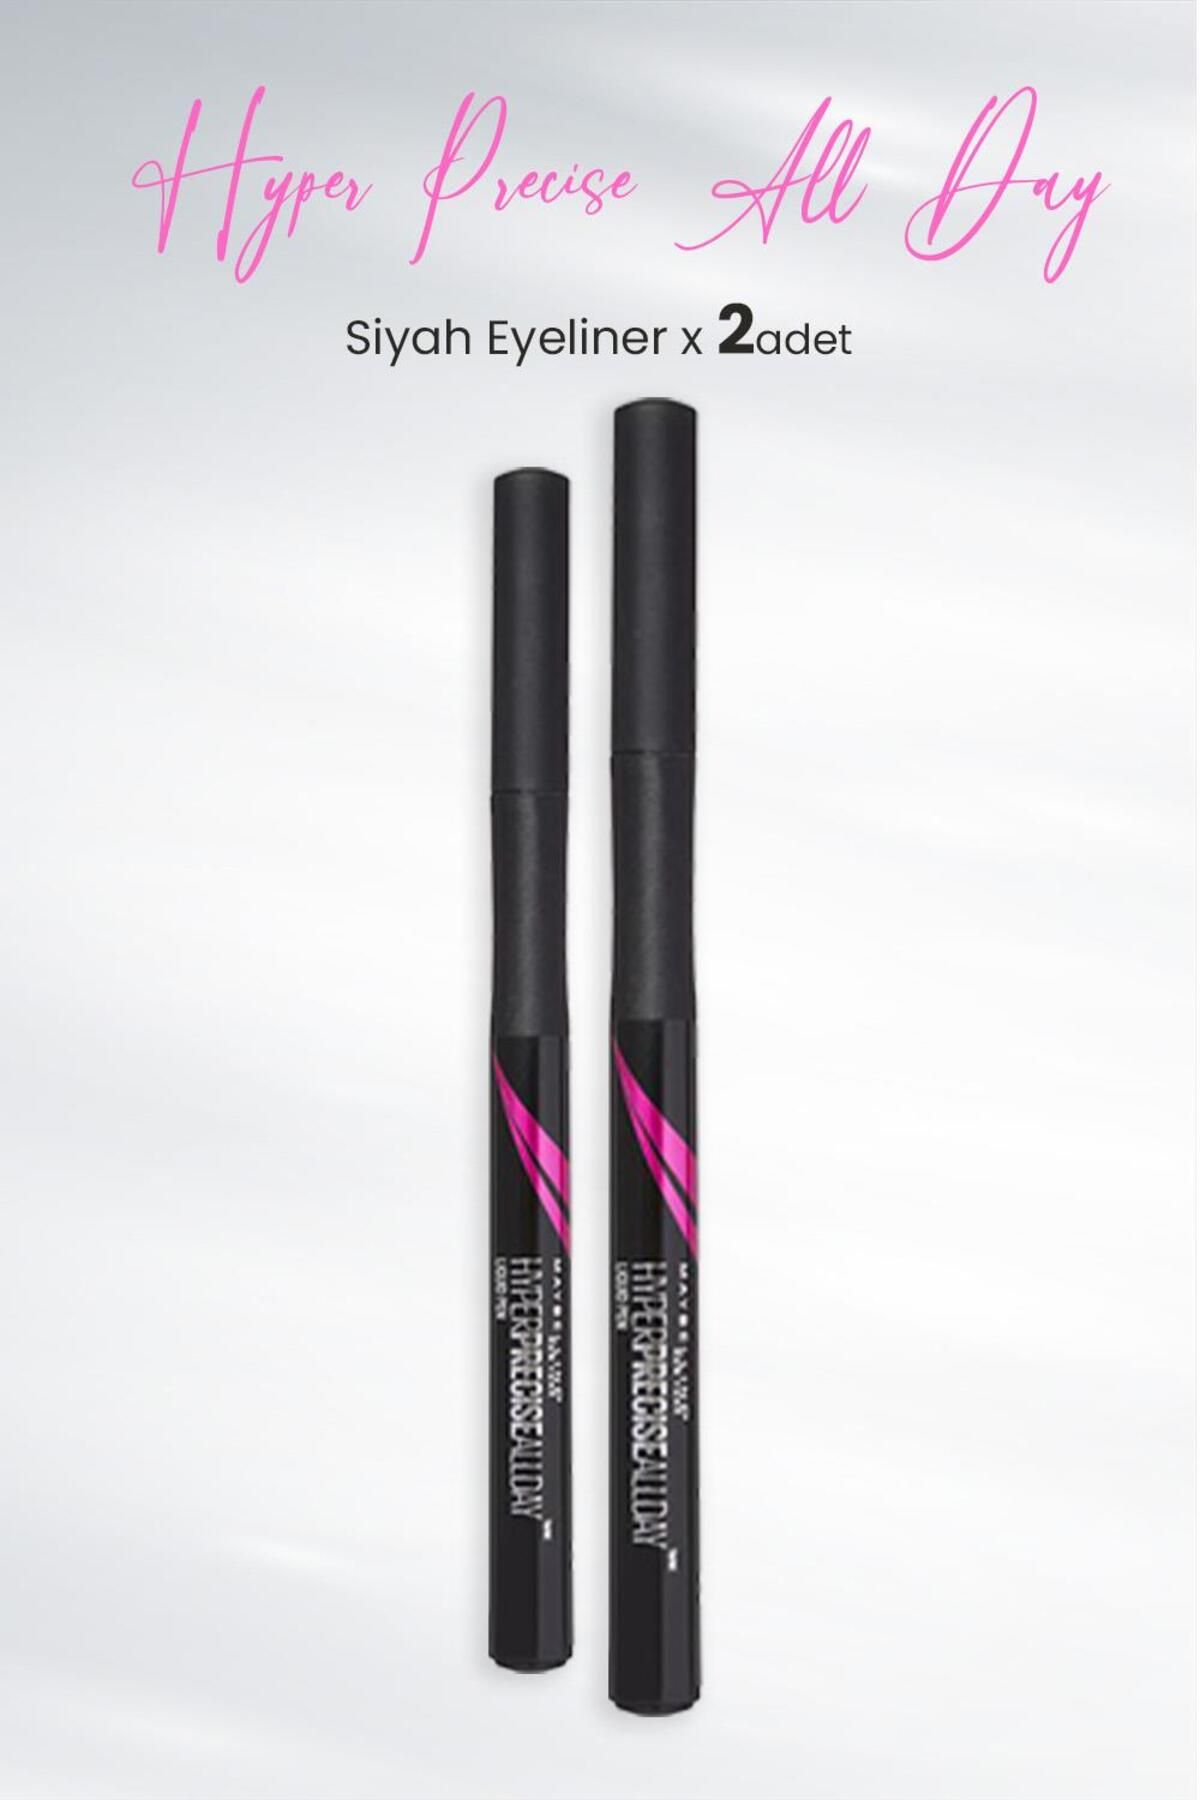 Maybelline New York Eyeliner Hyper Precise All Day Siyah X 2 Adet